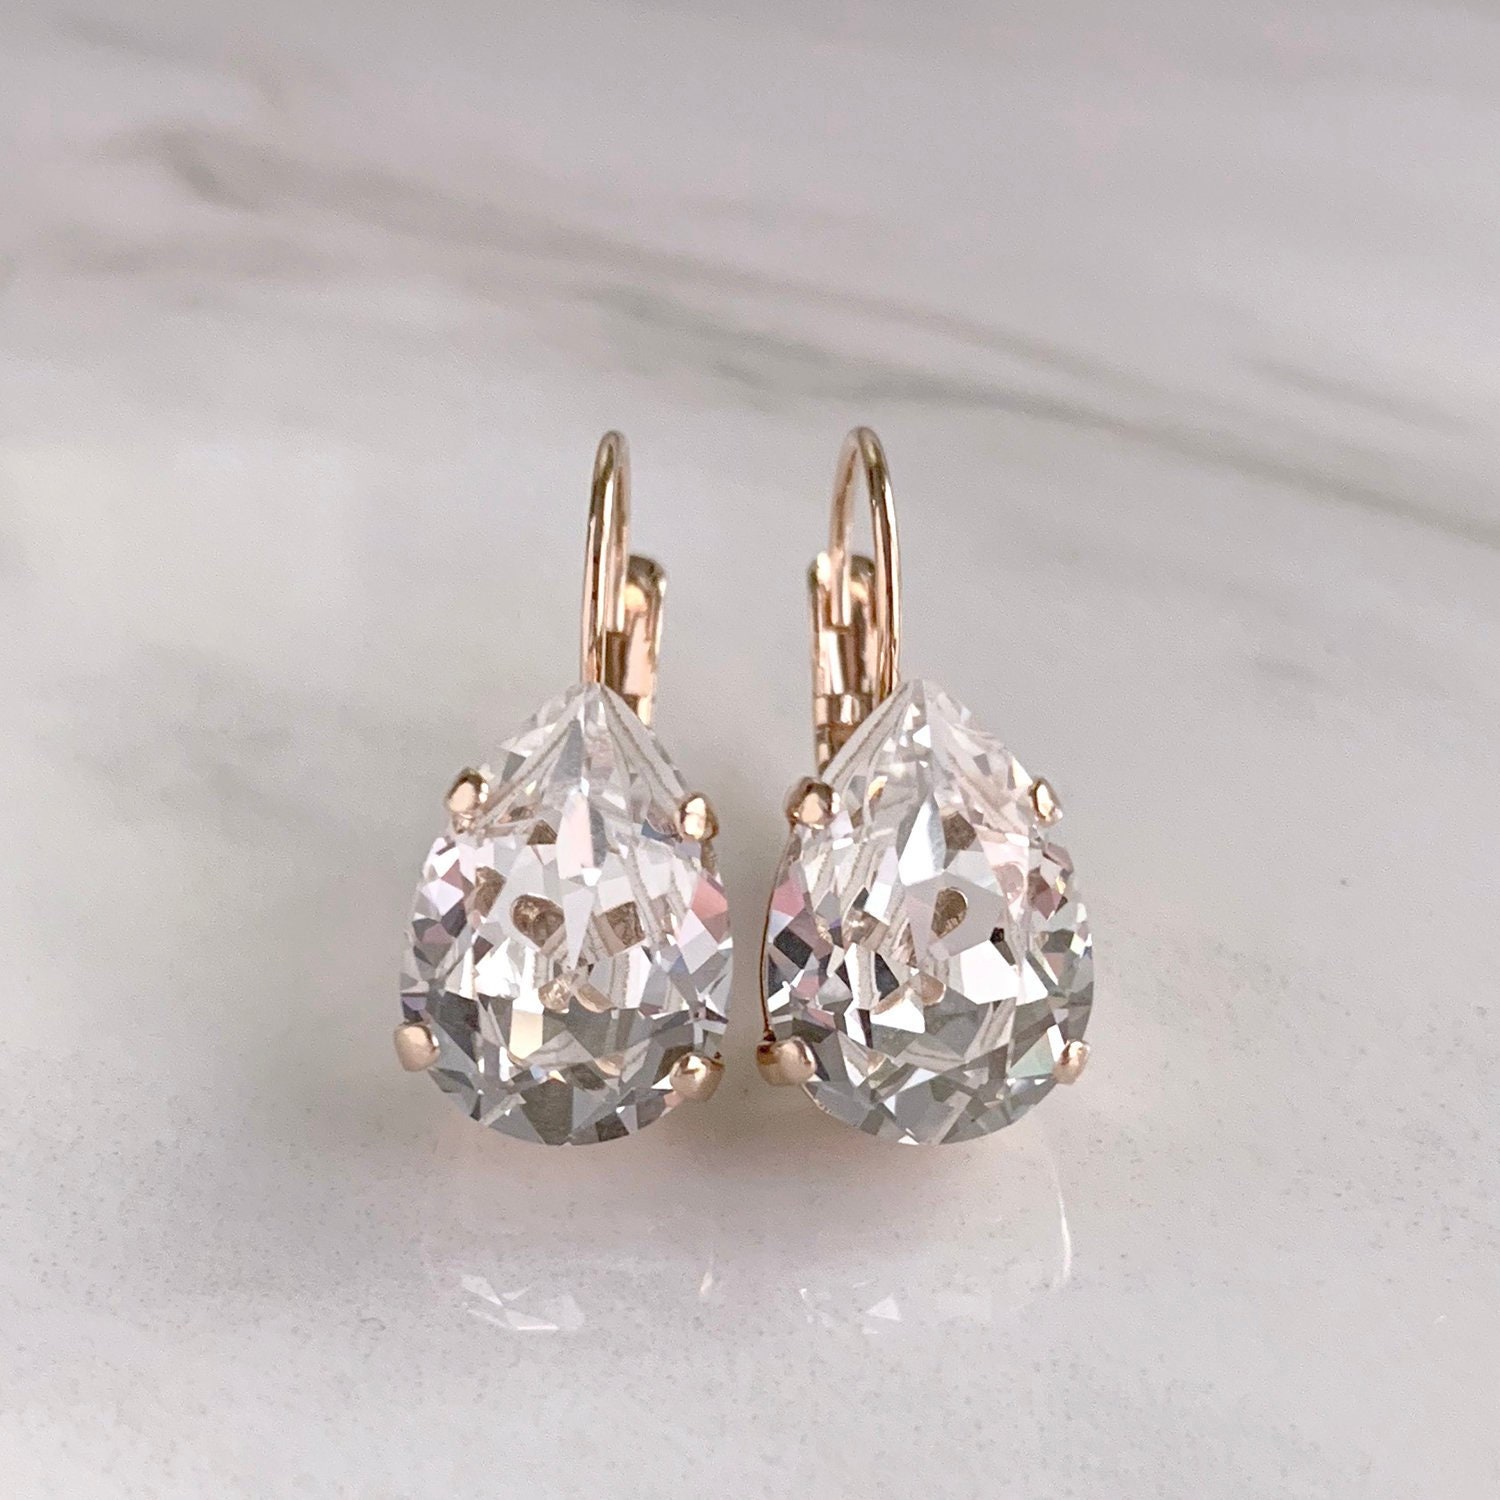 Rose gold wedding earrings simple drop earrings swarovski | Etsy